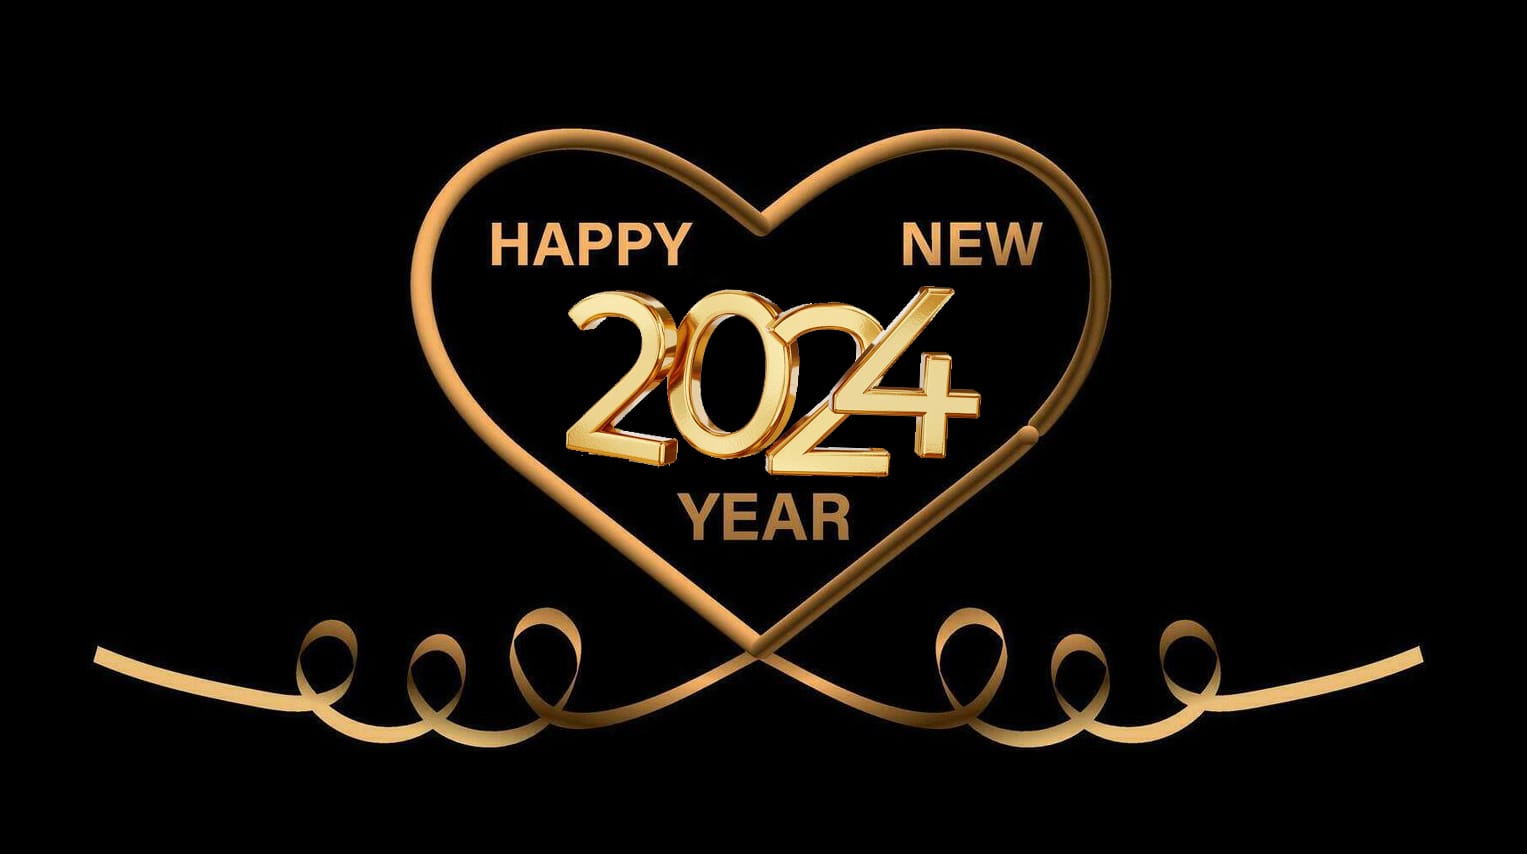 Happ New Year 2024 Heart Shape Gold Wallpaper Hd